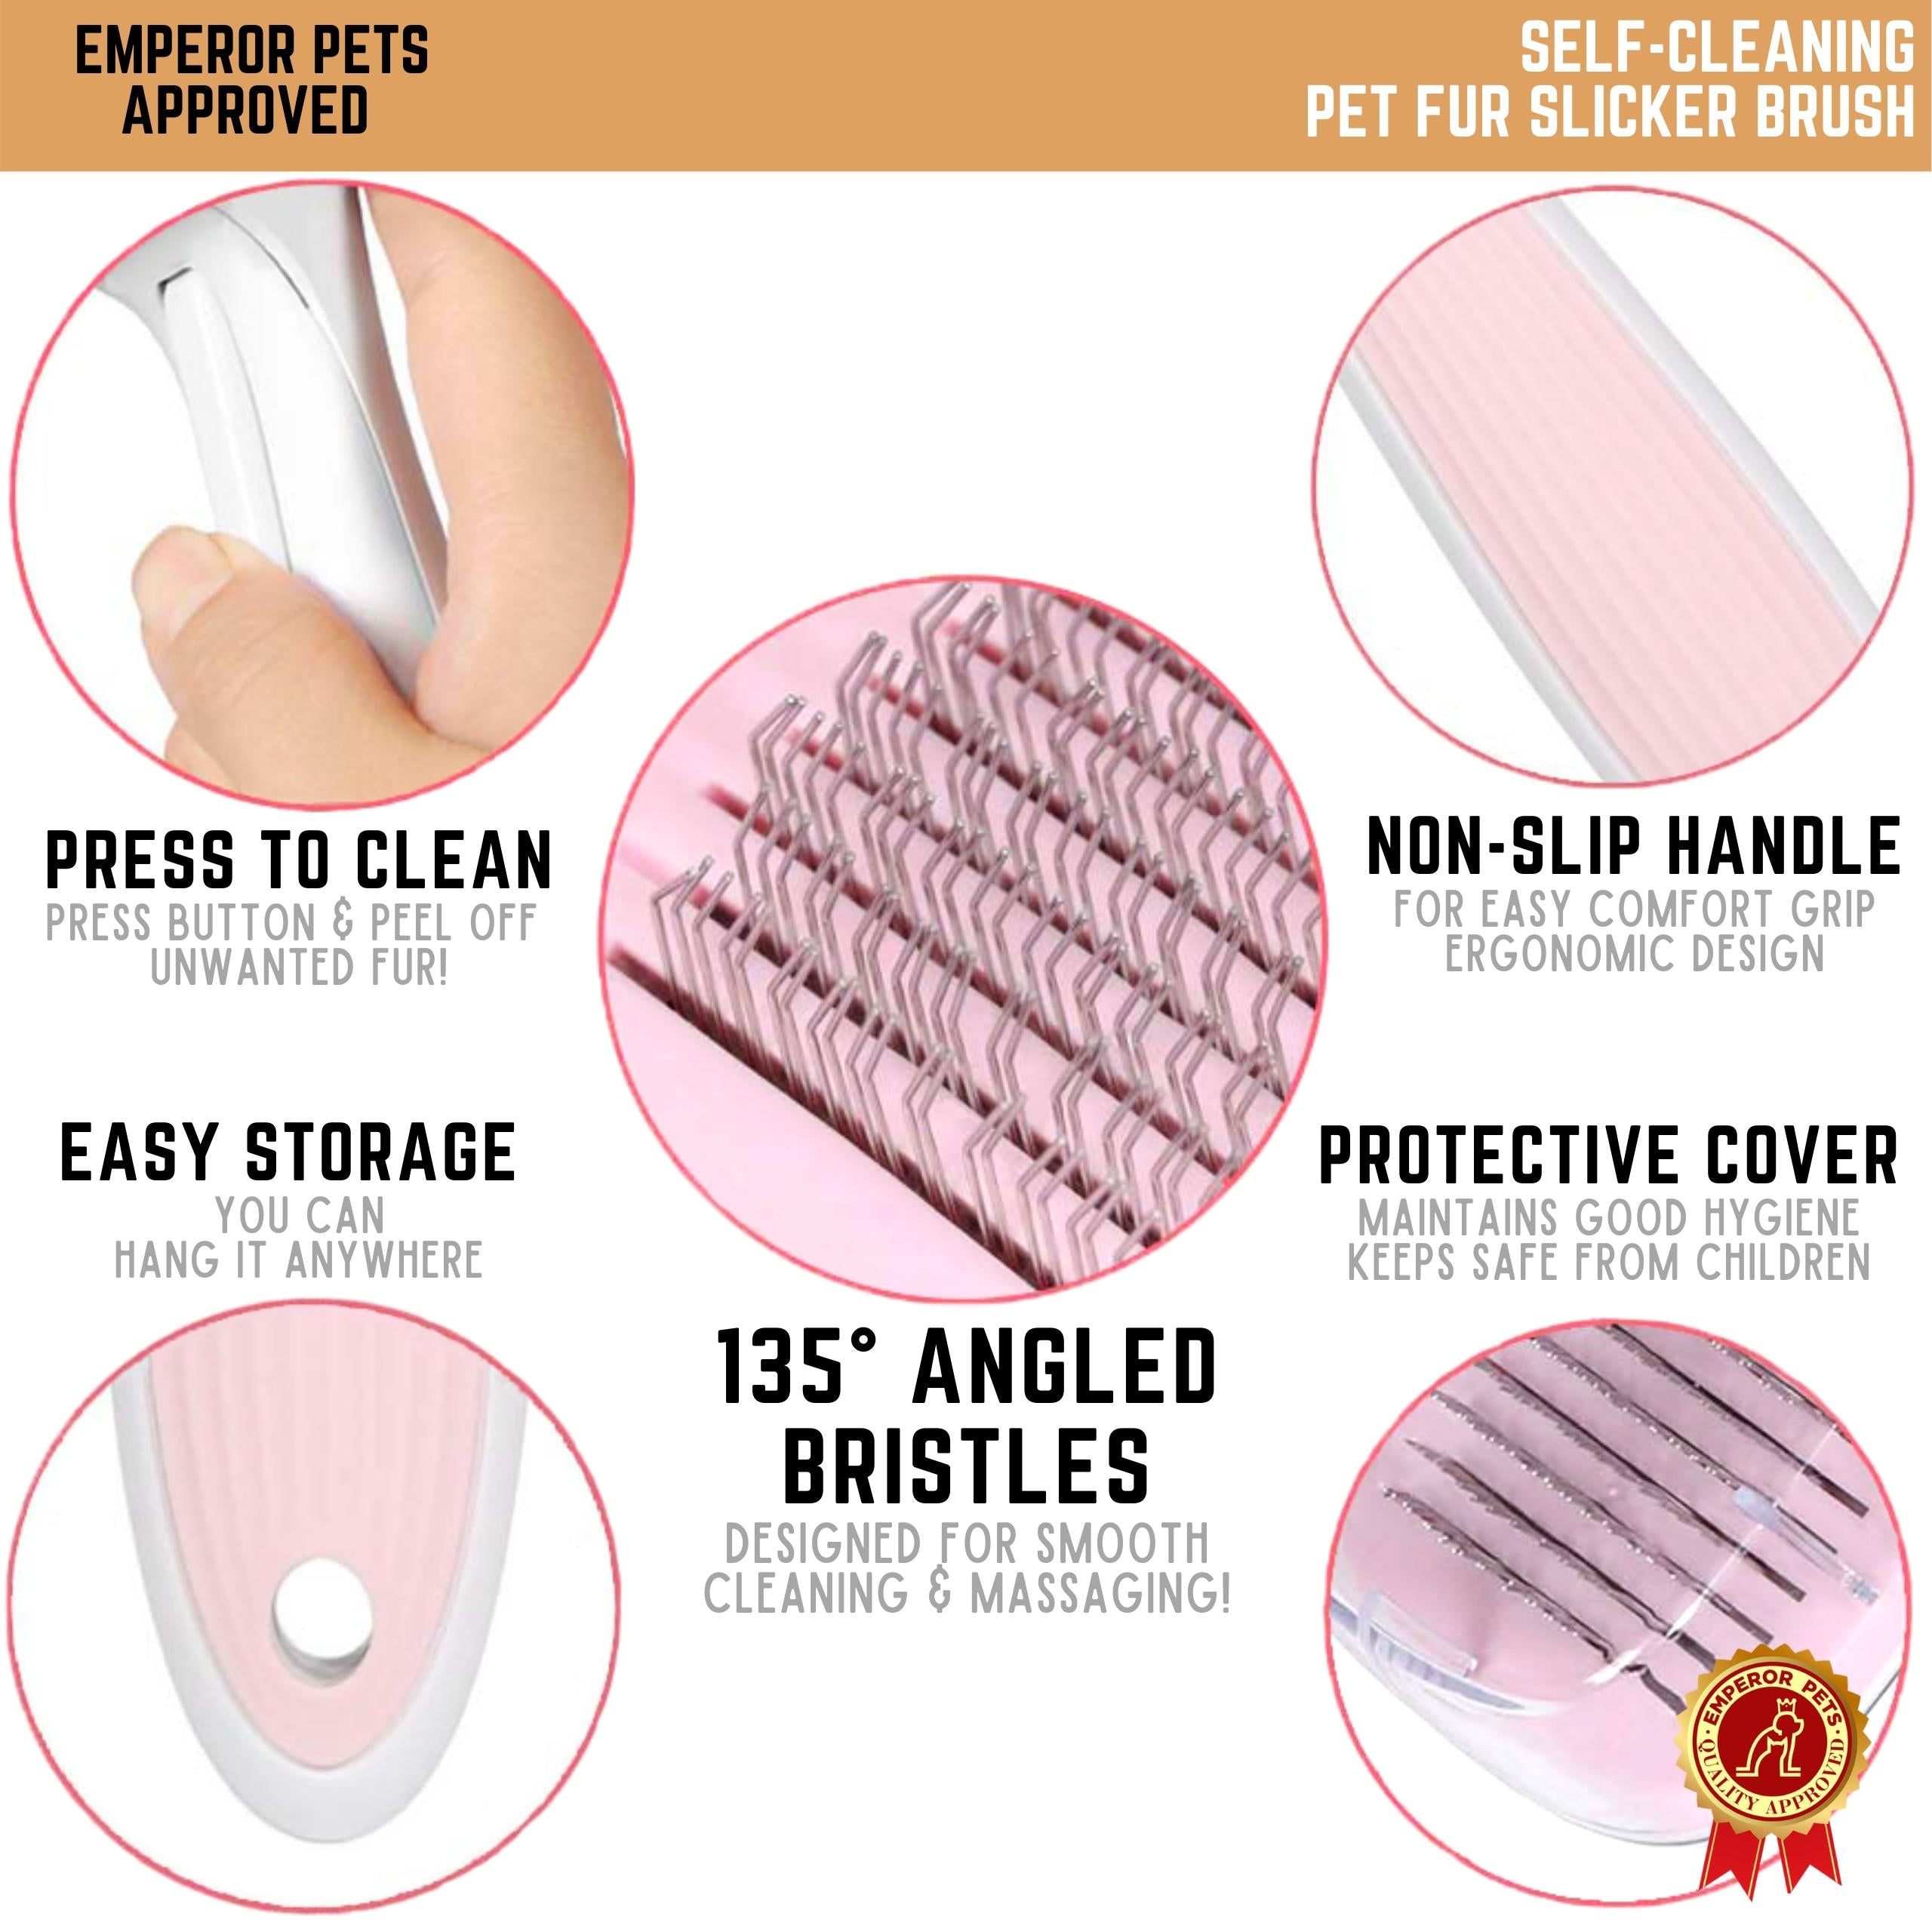 Emperor Pets Self Cleaning Pet Fur Slicker Brush for Long Fur Pets, Dog Brush, Cat Brush, Pink Color - Image 3 Key Features